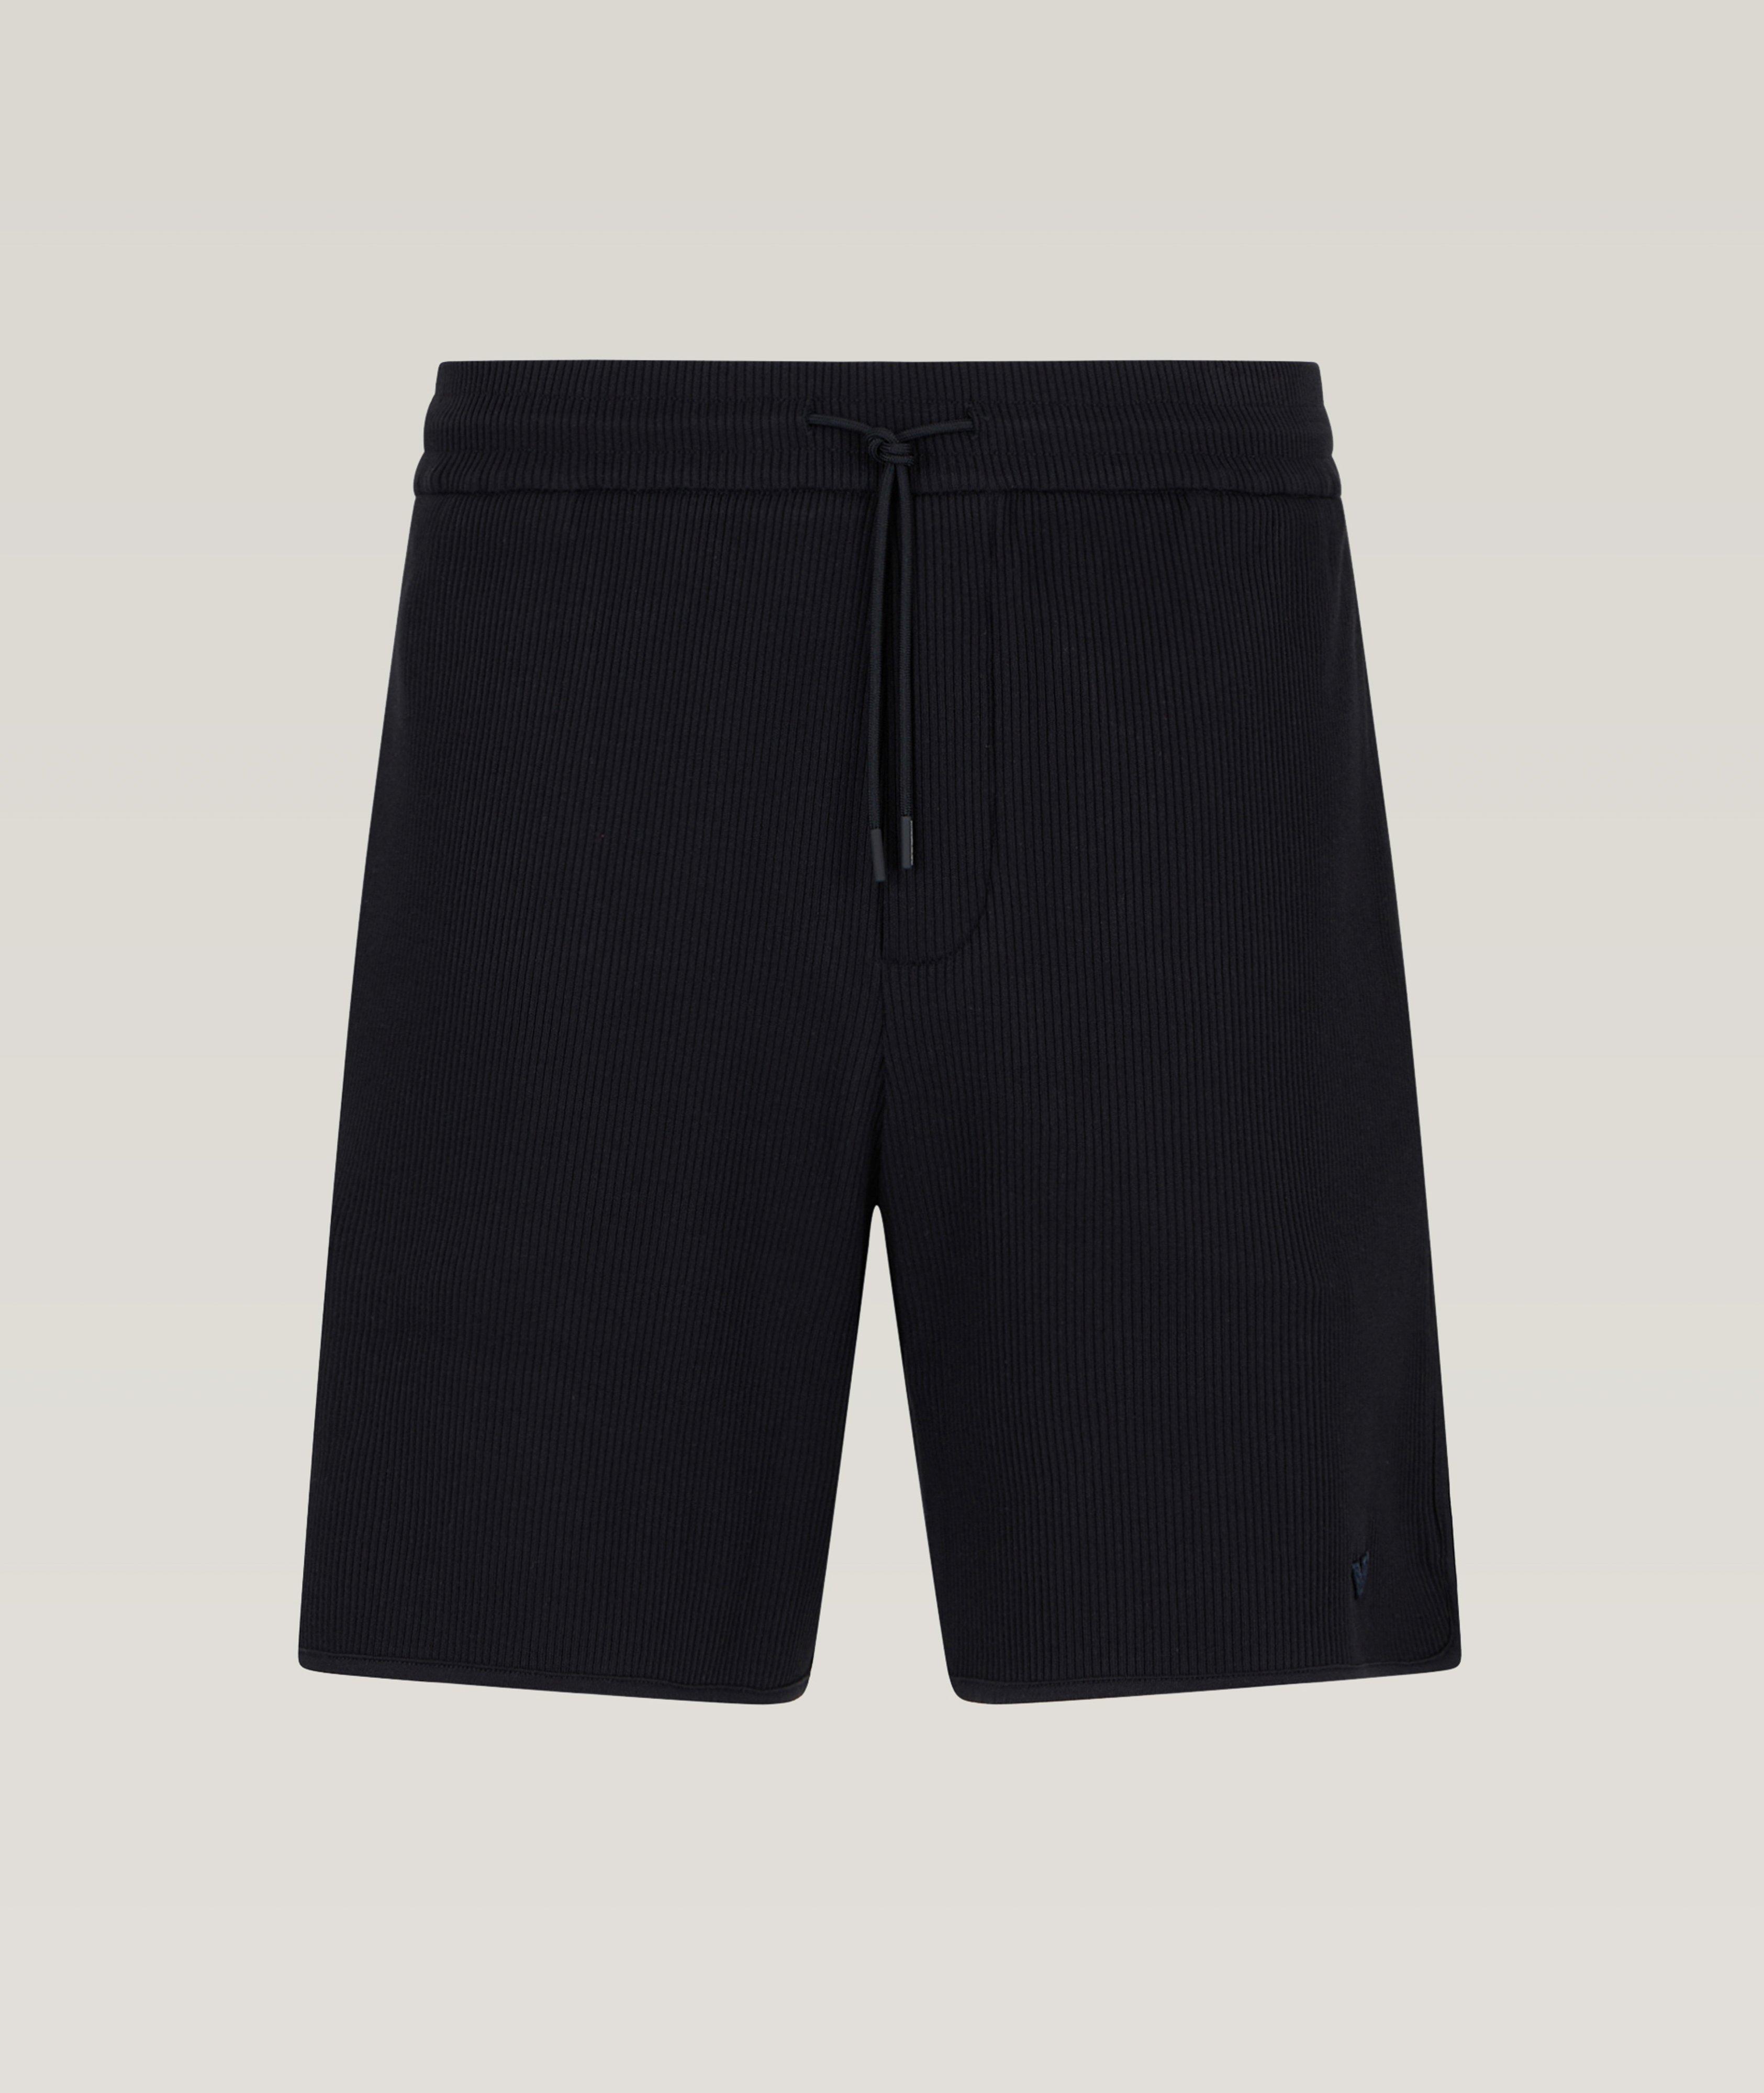 Ribbed Cotton-Blend Bermuda Shorts image 0